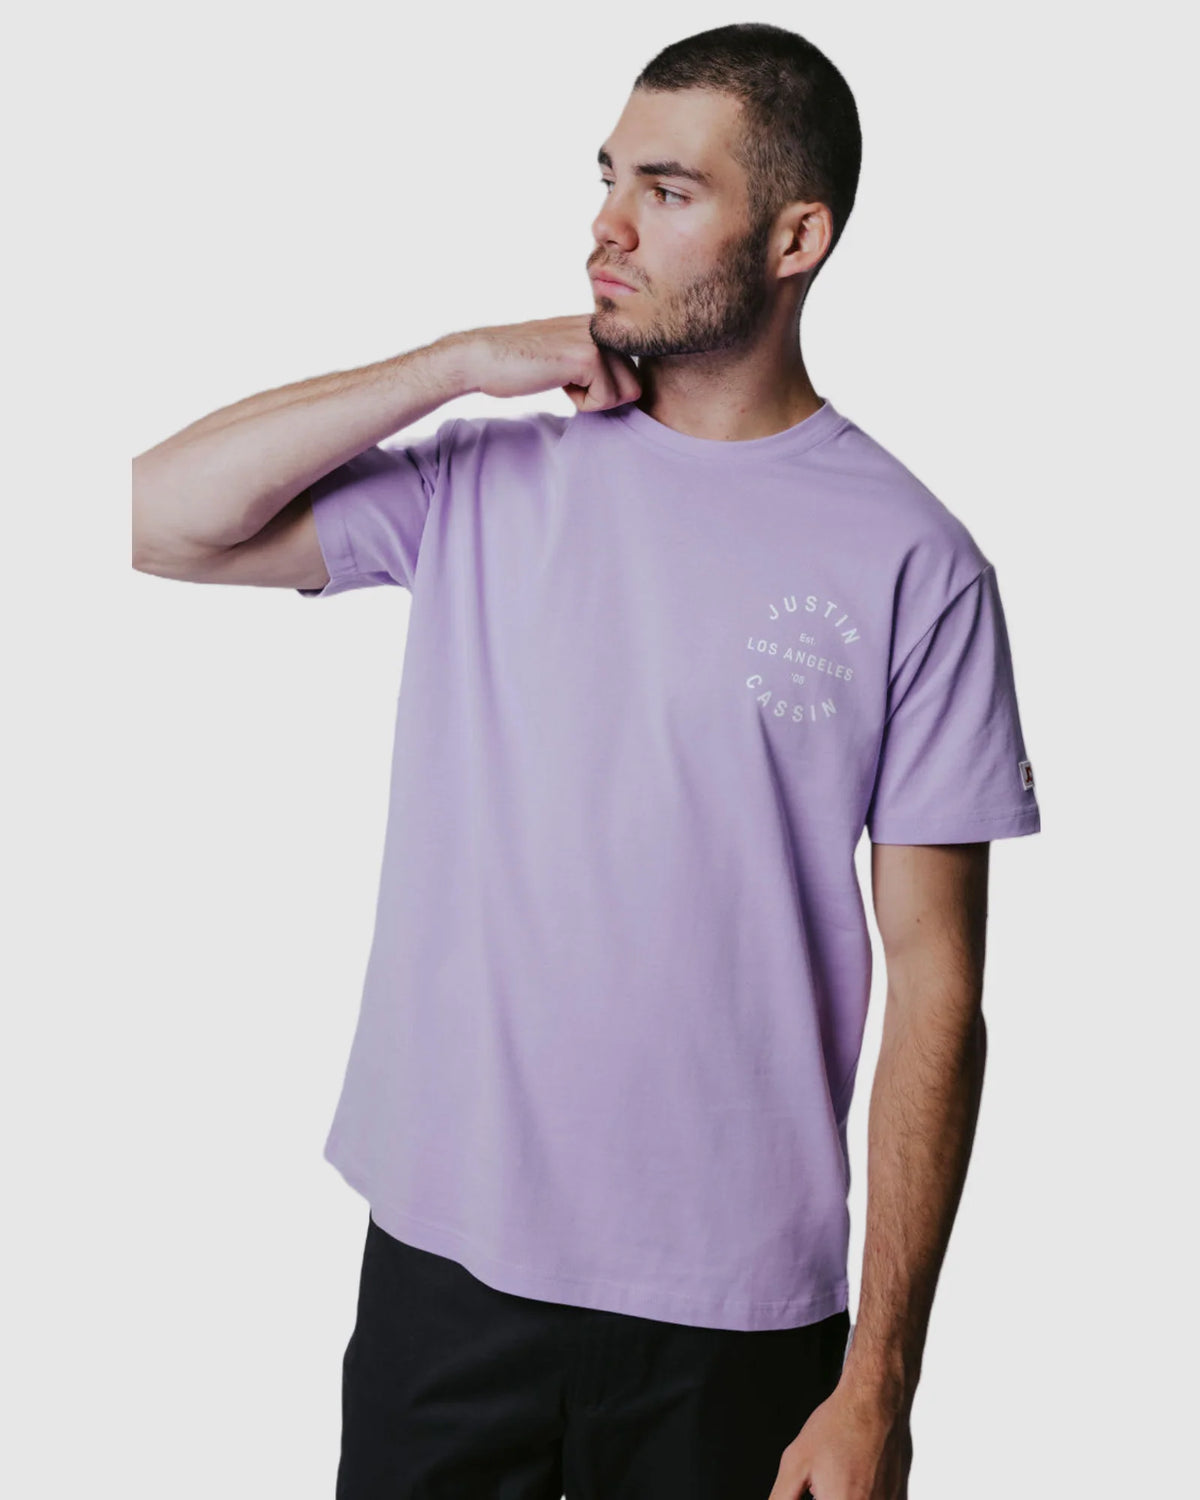 Justin Cassin Original T-Shirt in Lilac Color